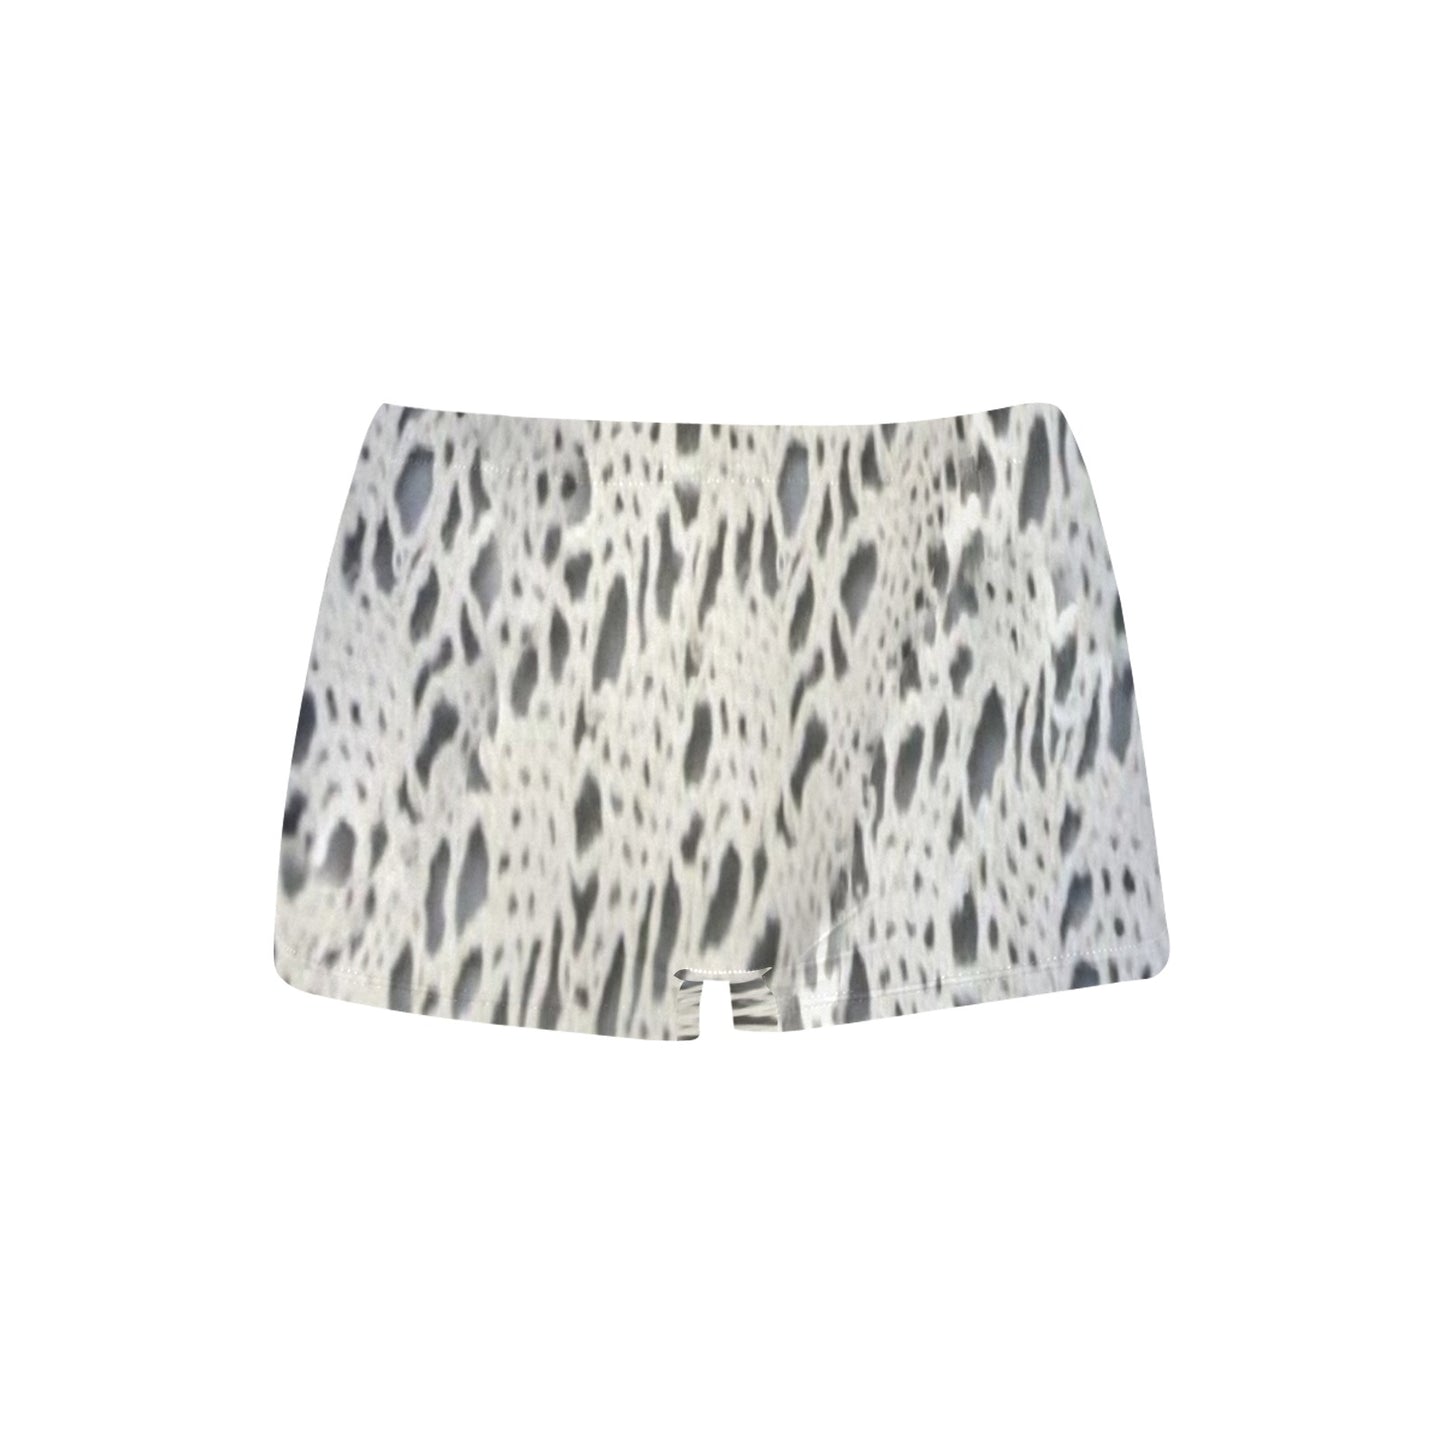 Printed Lace Boyshorts, daisy dukes, pum pum shorts, shortie shorts , design 12